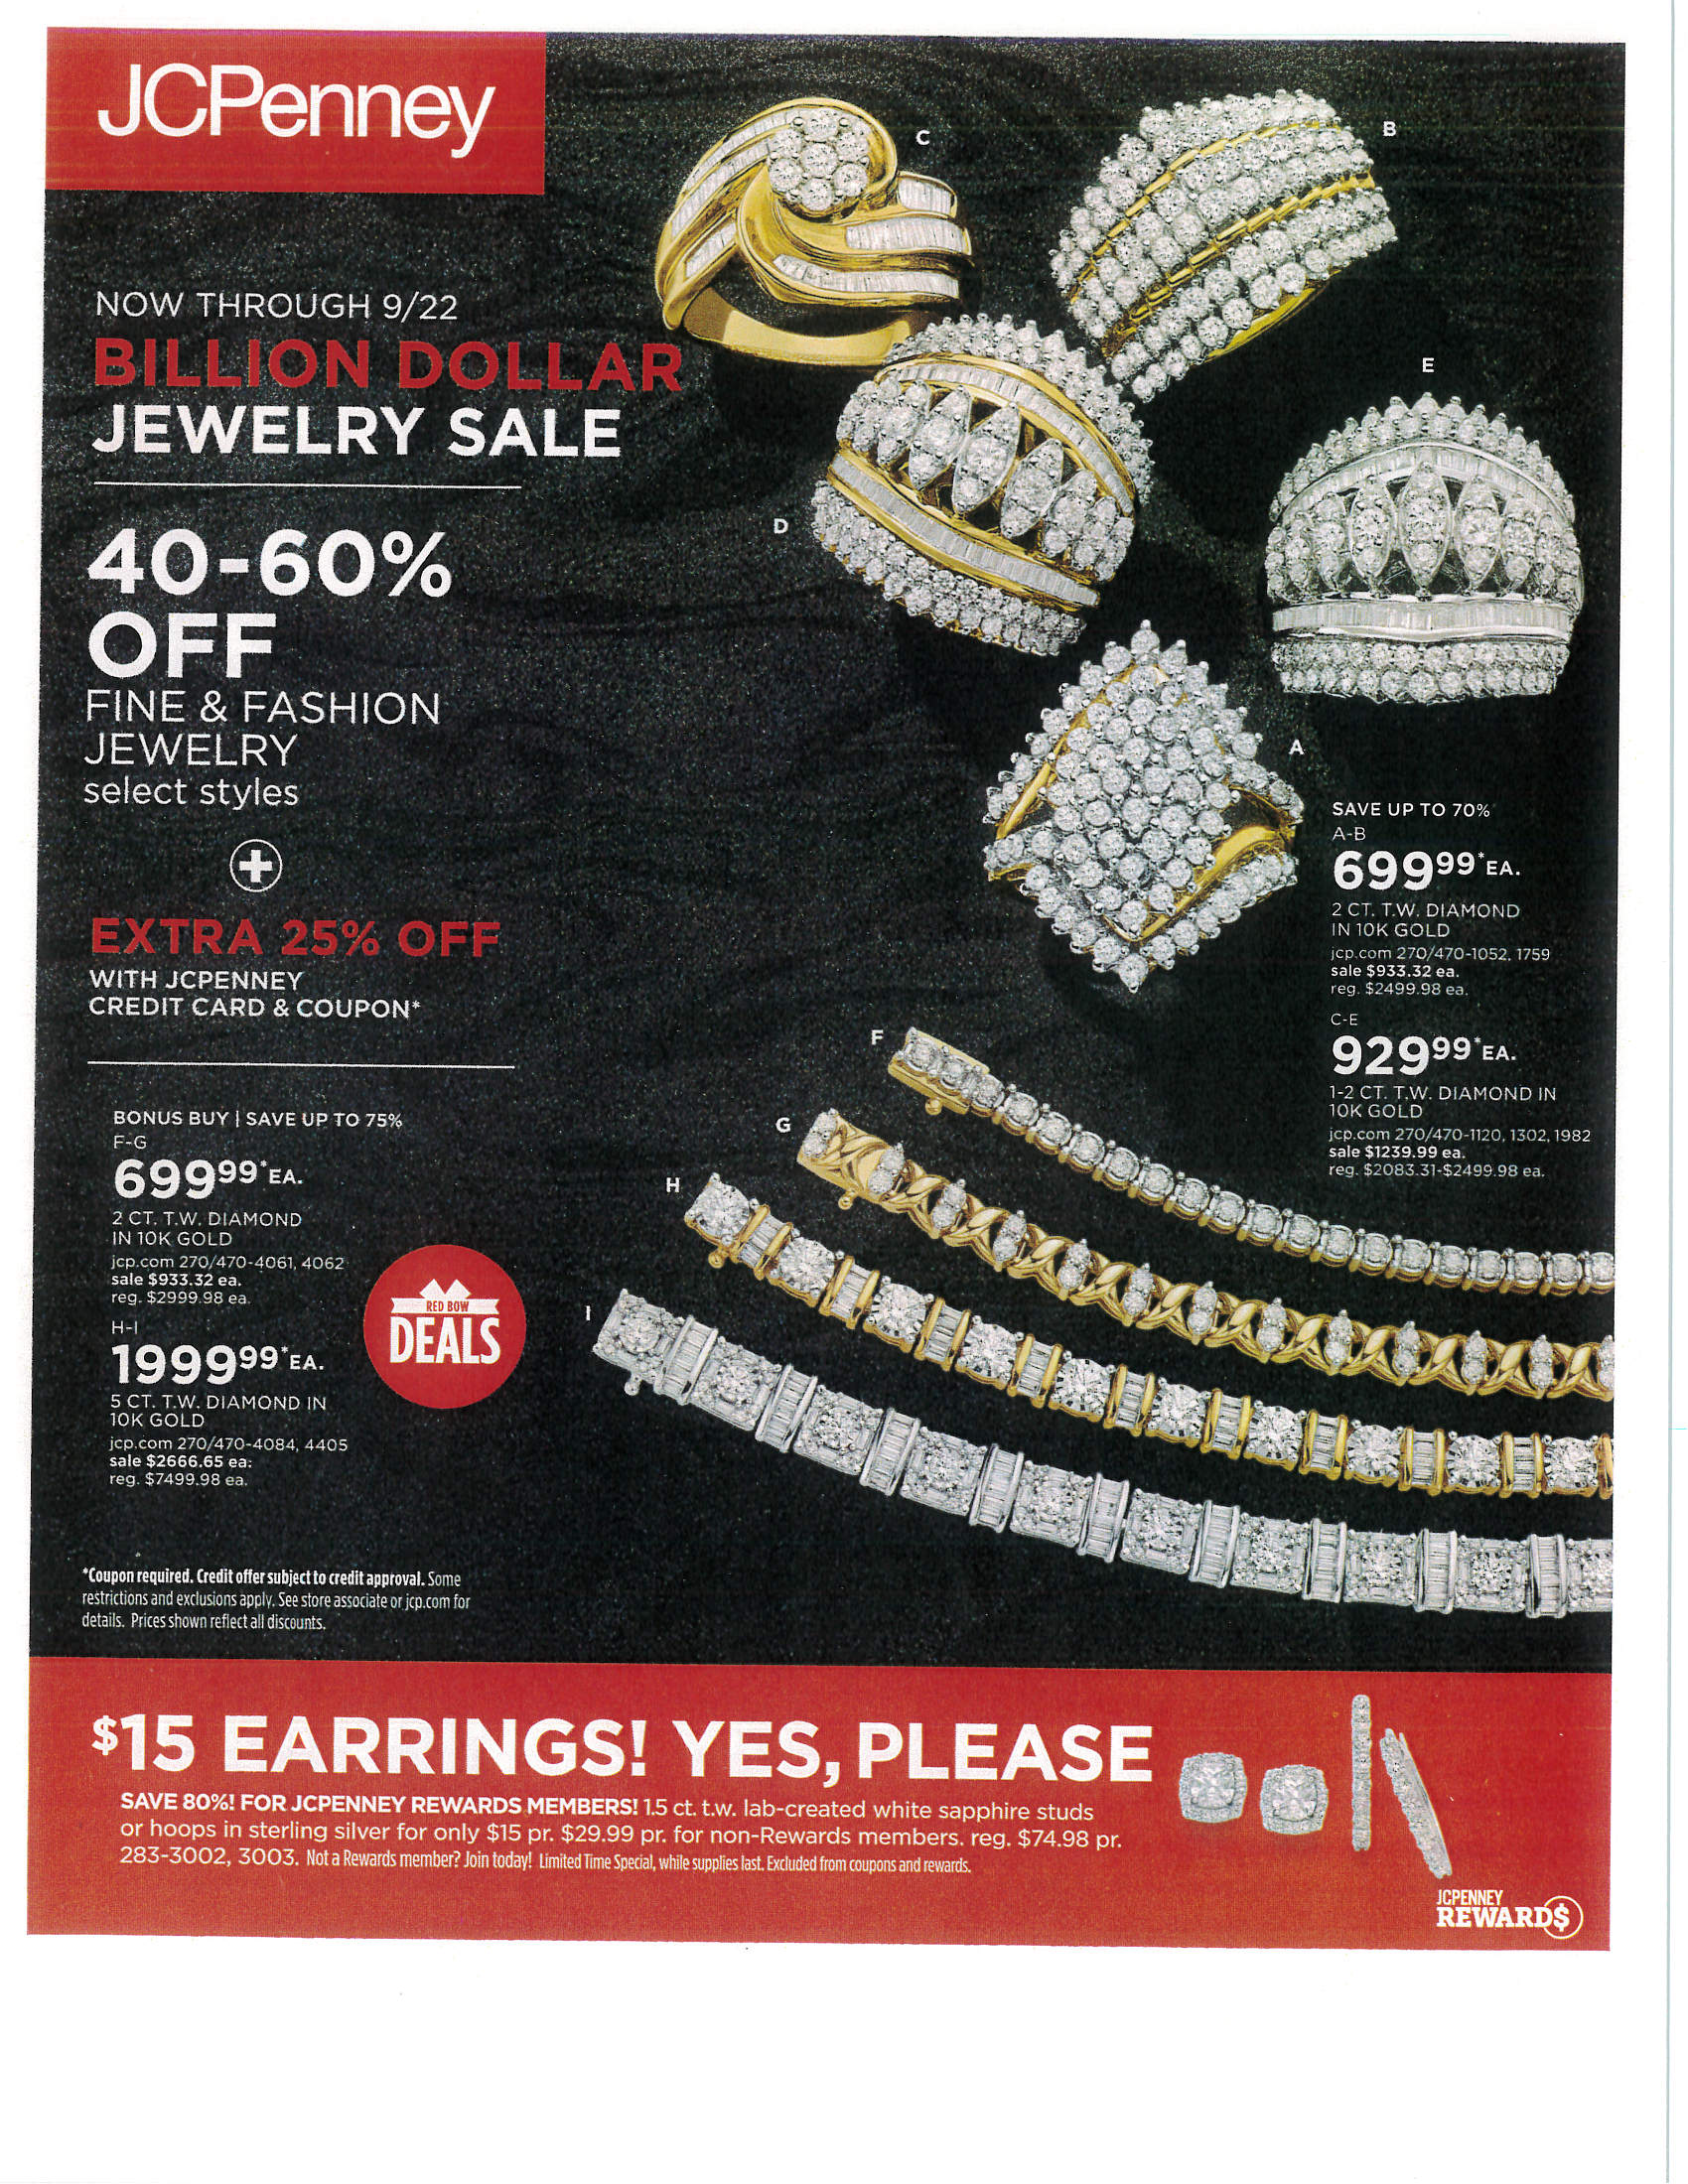 JCPenney Billion Dollar Jewelry Sale - Galleria at Crystal Run